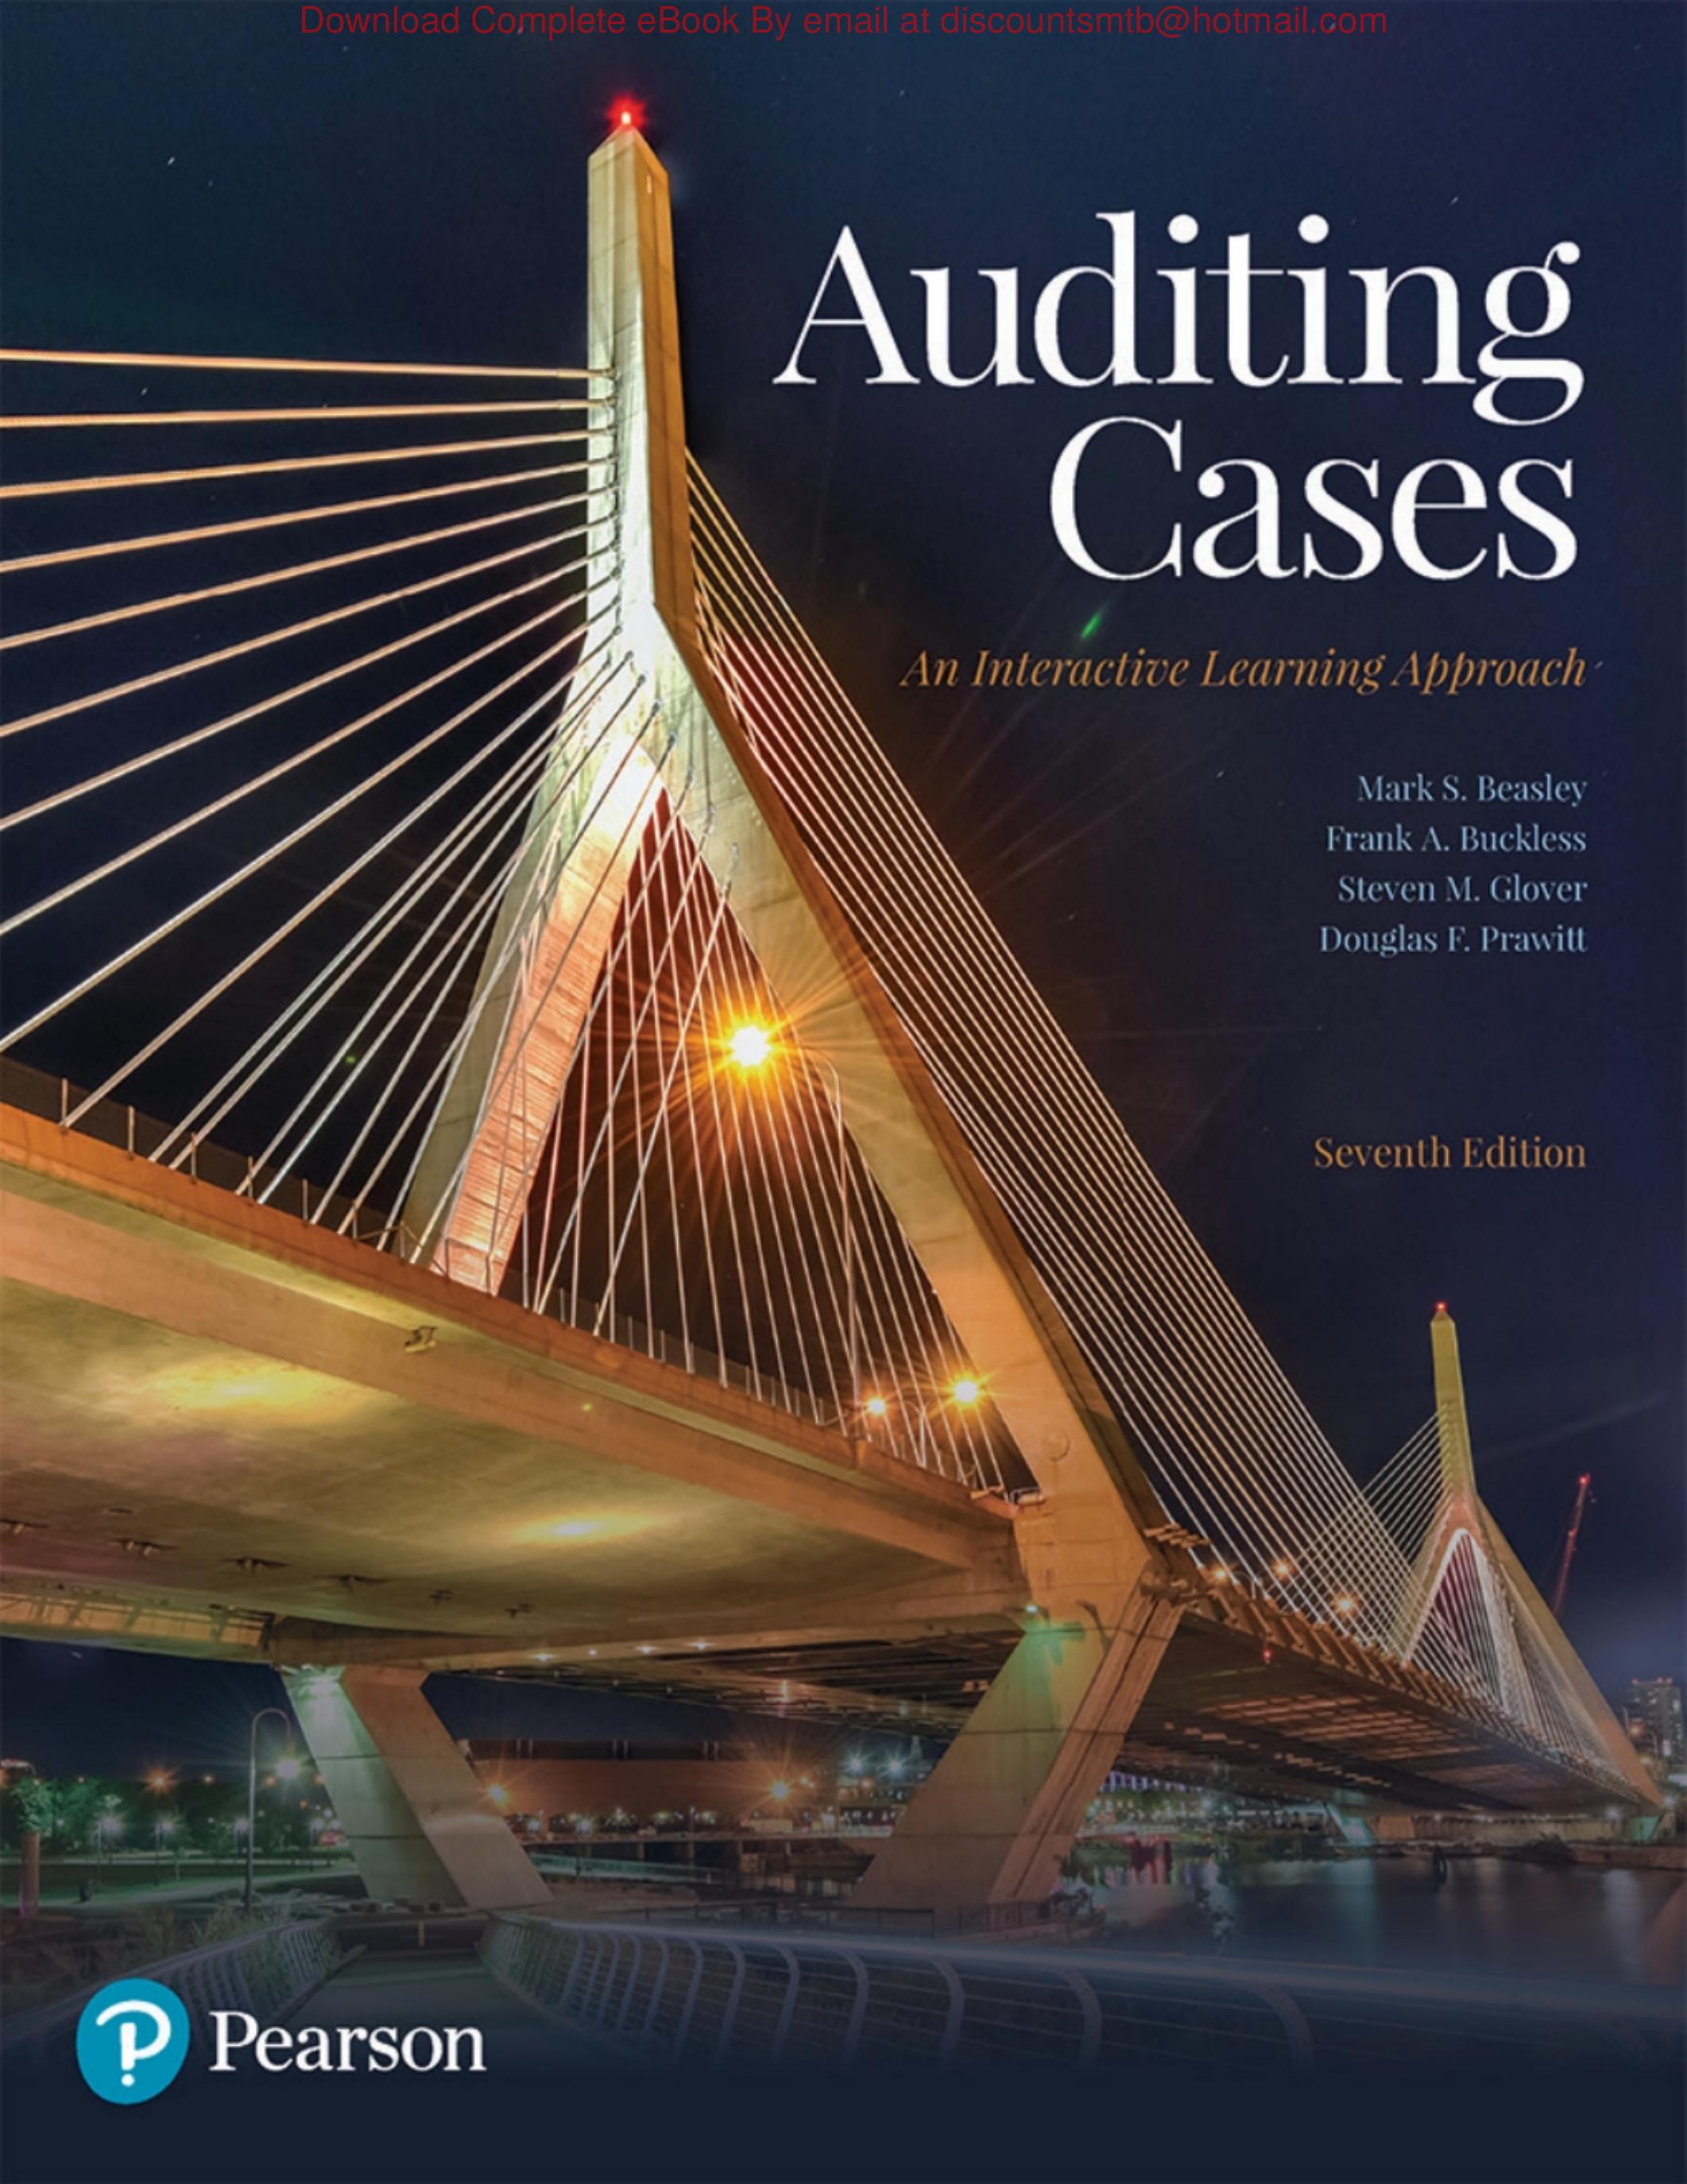 Auditing Cases An Interactive Learning Approach by Mark Beasley Frank Buckless Steven Glover Douglas Prawitt